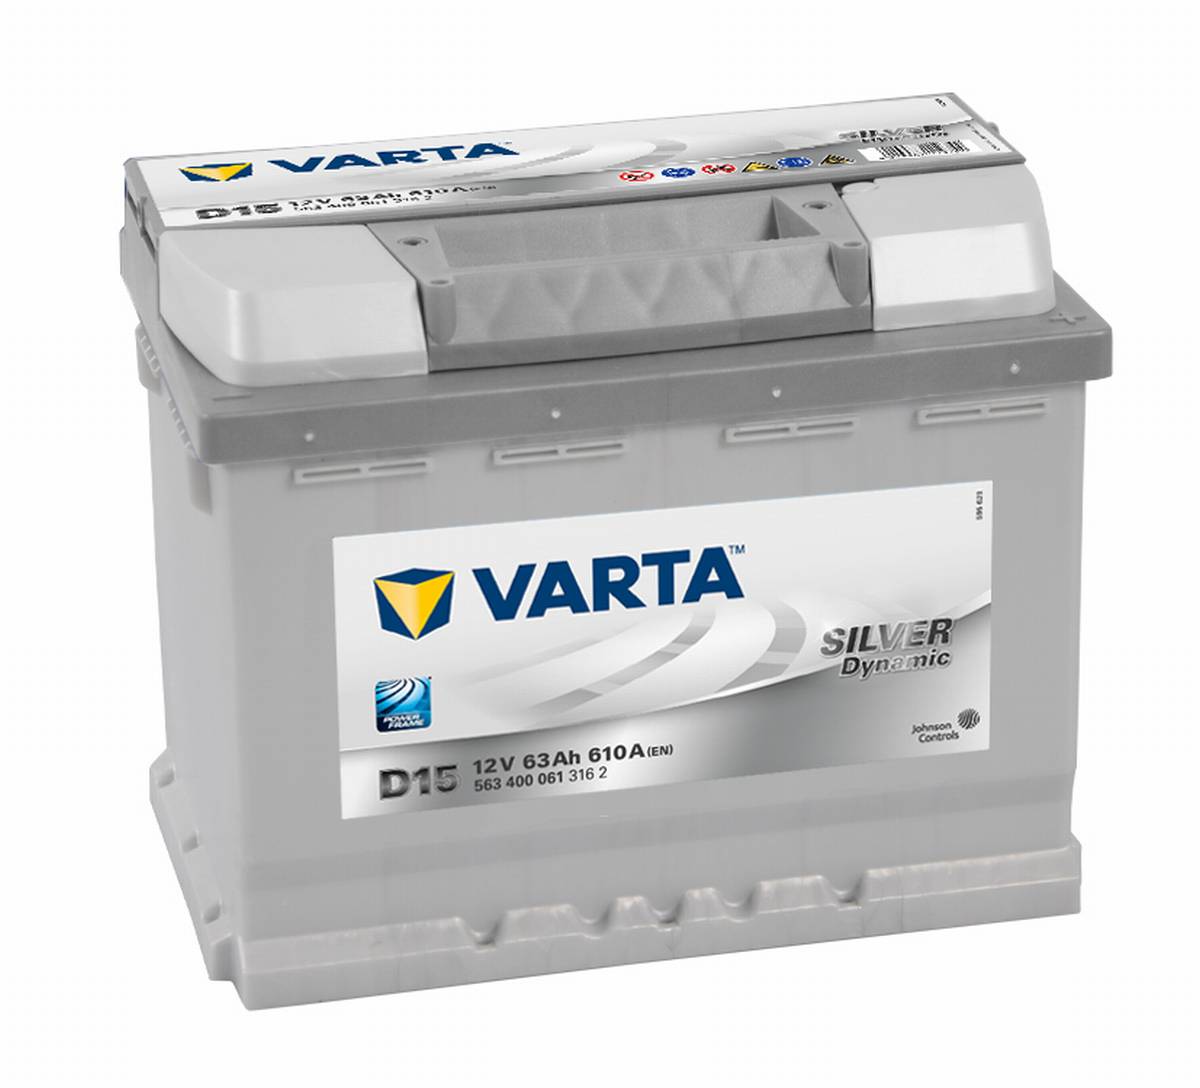 VARTA D15 Silver Dynamic 12V 63Ah 610A batteria auto 563 400 061